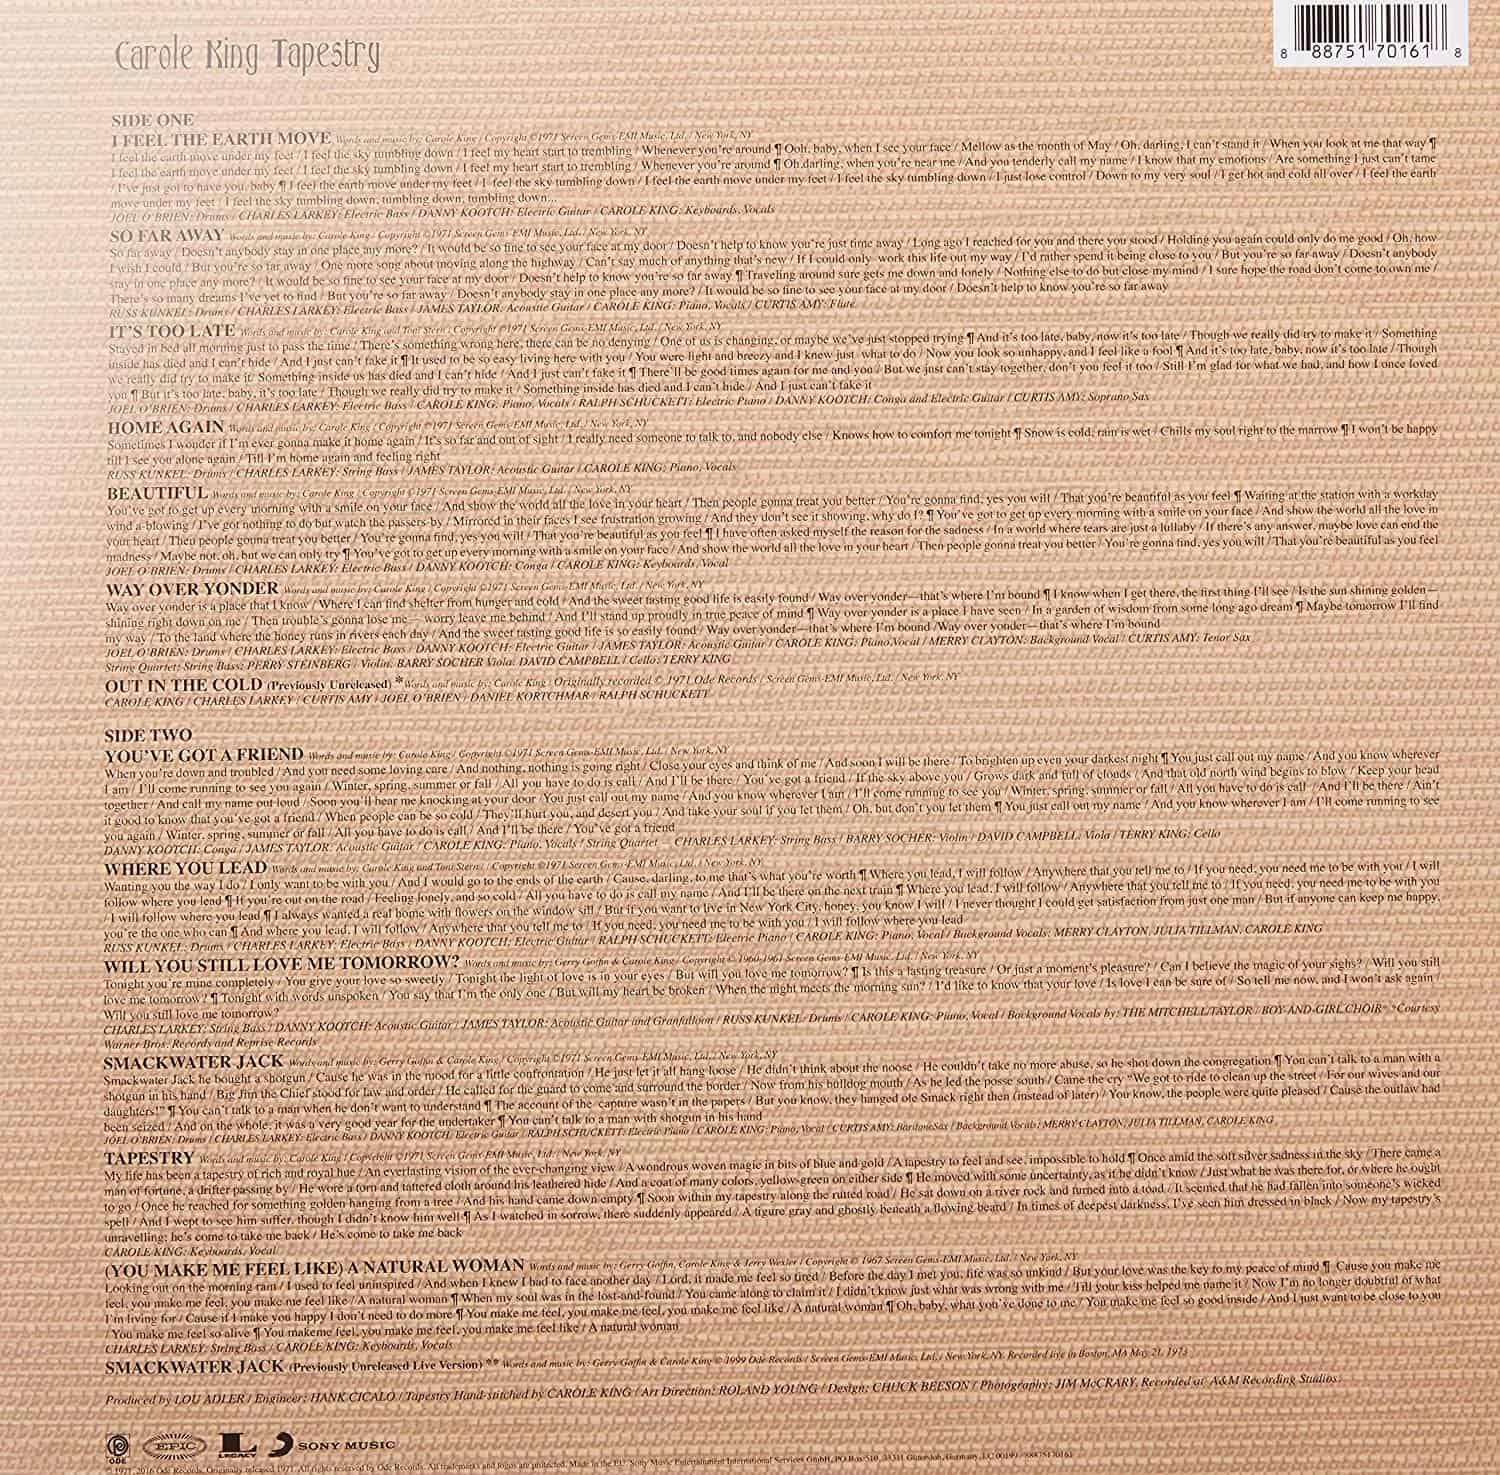 Carole-King-Tapestry-vinyl-LP-record-album-back